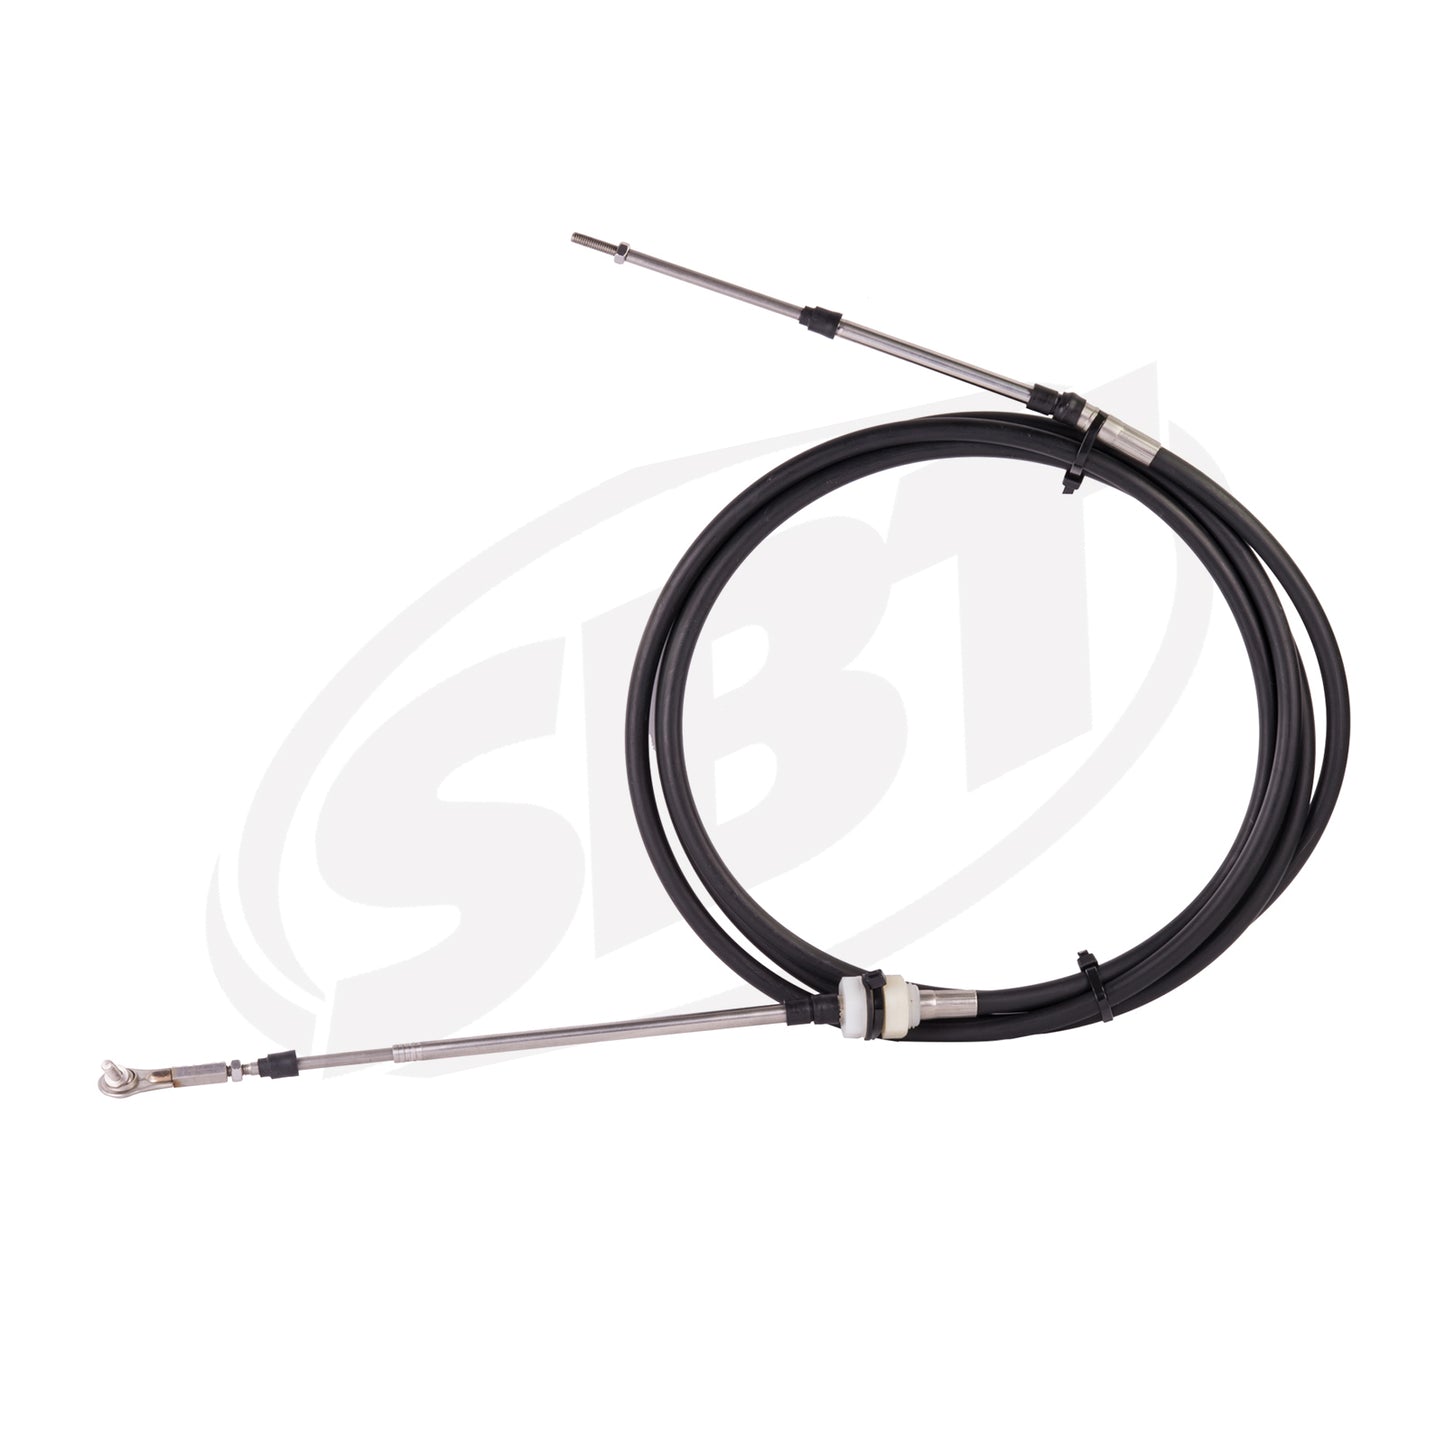 SBT Yamaha Steering Cable GP 1300 R 2 P F1G-61481-01-00 F1G-61481-02-00 2003